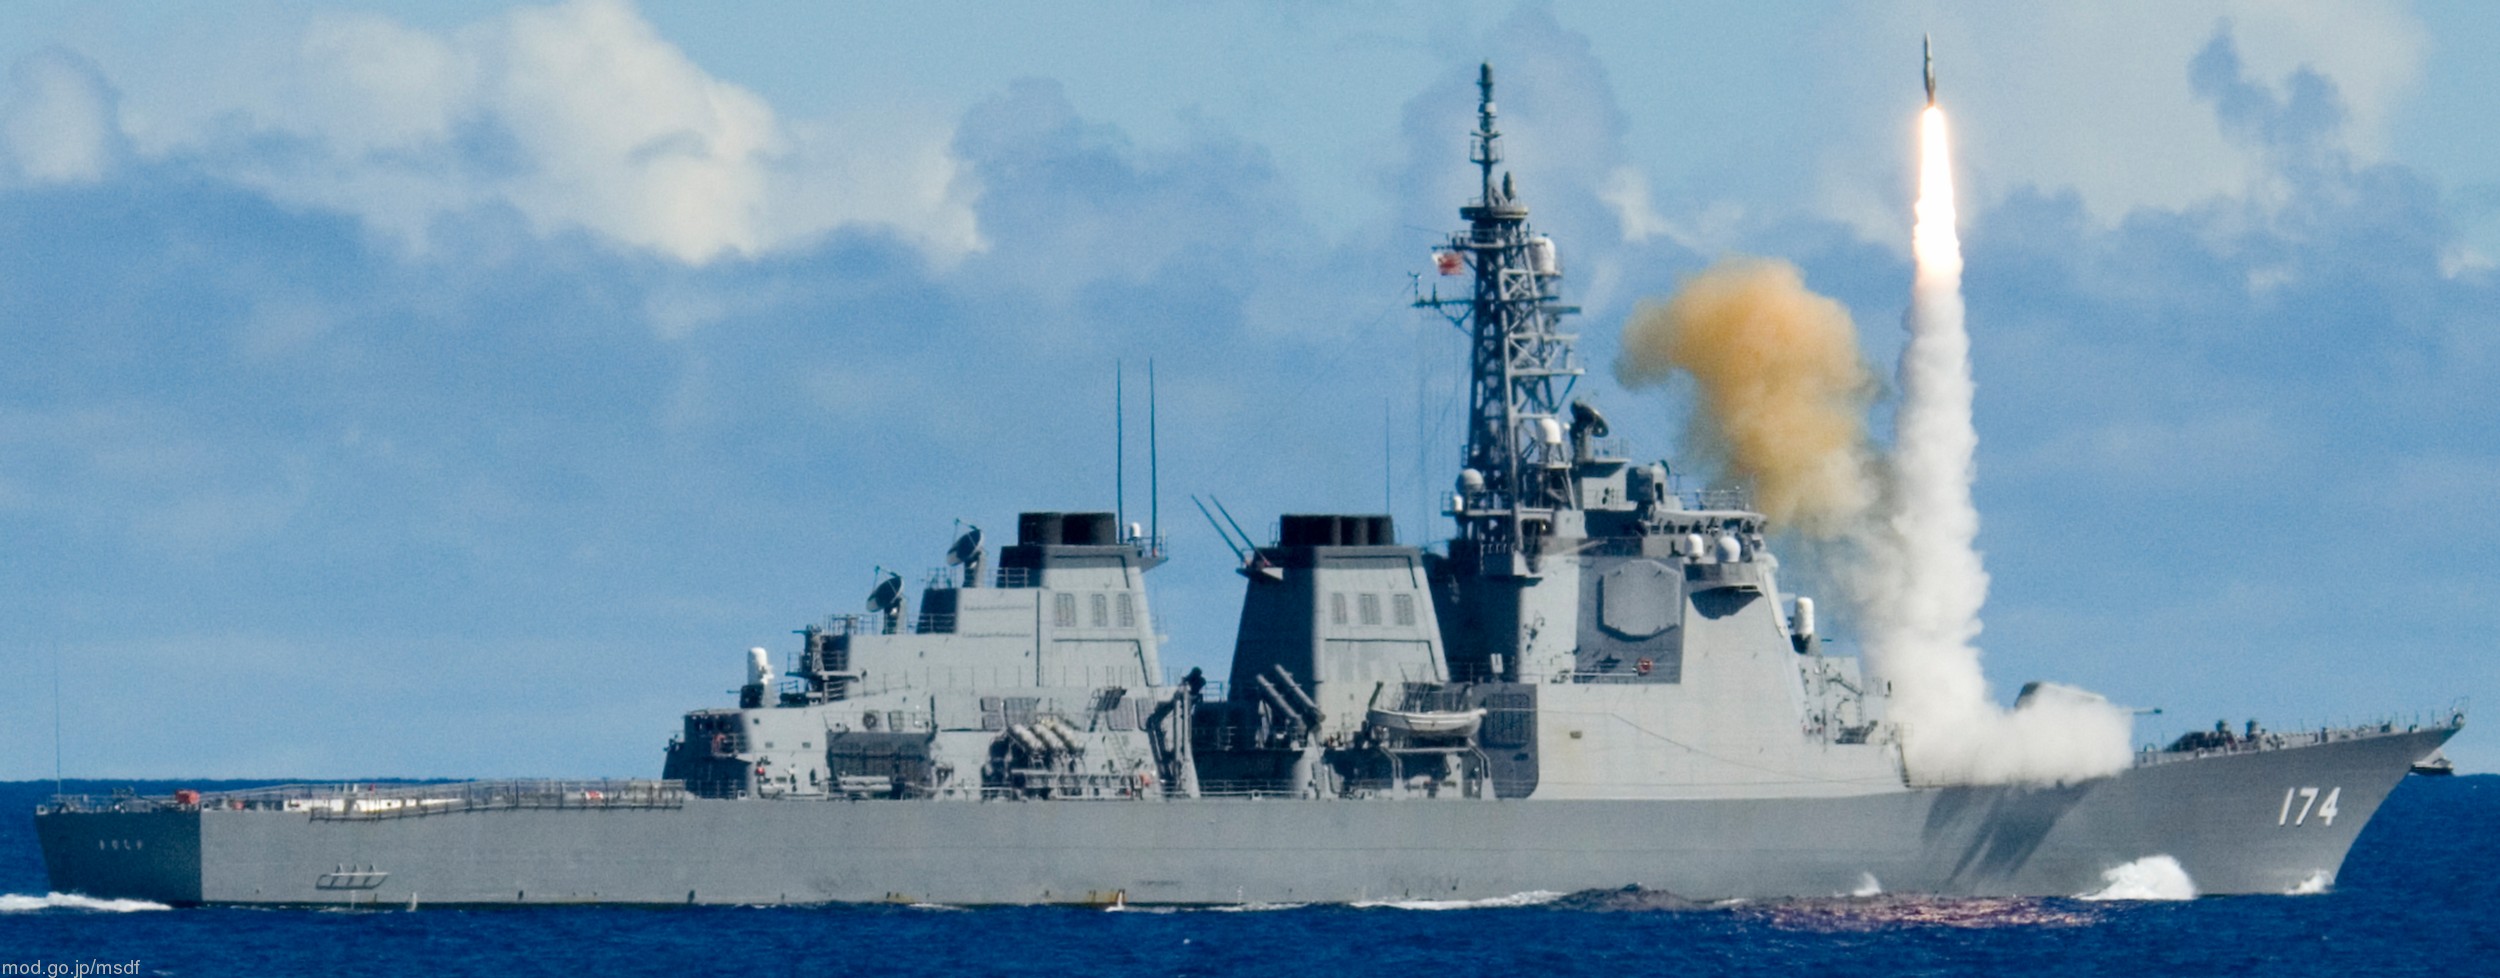 ddg-174 jds kirishima kongou class destroyer japan maritime self defense force jmsdf 12 rim-161 standard missile sm-3